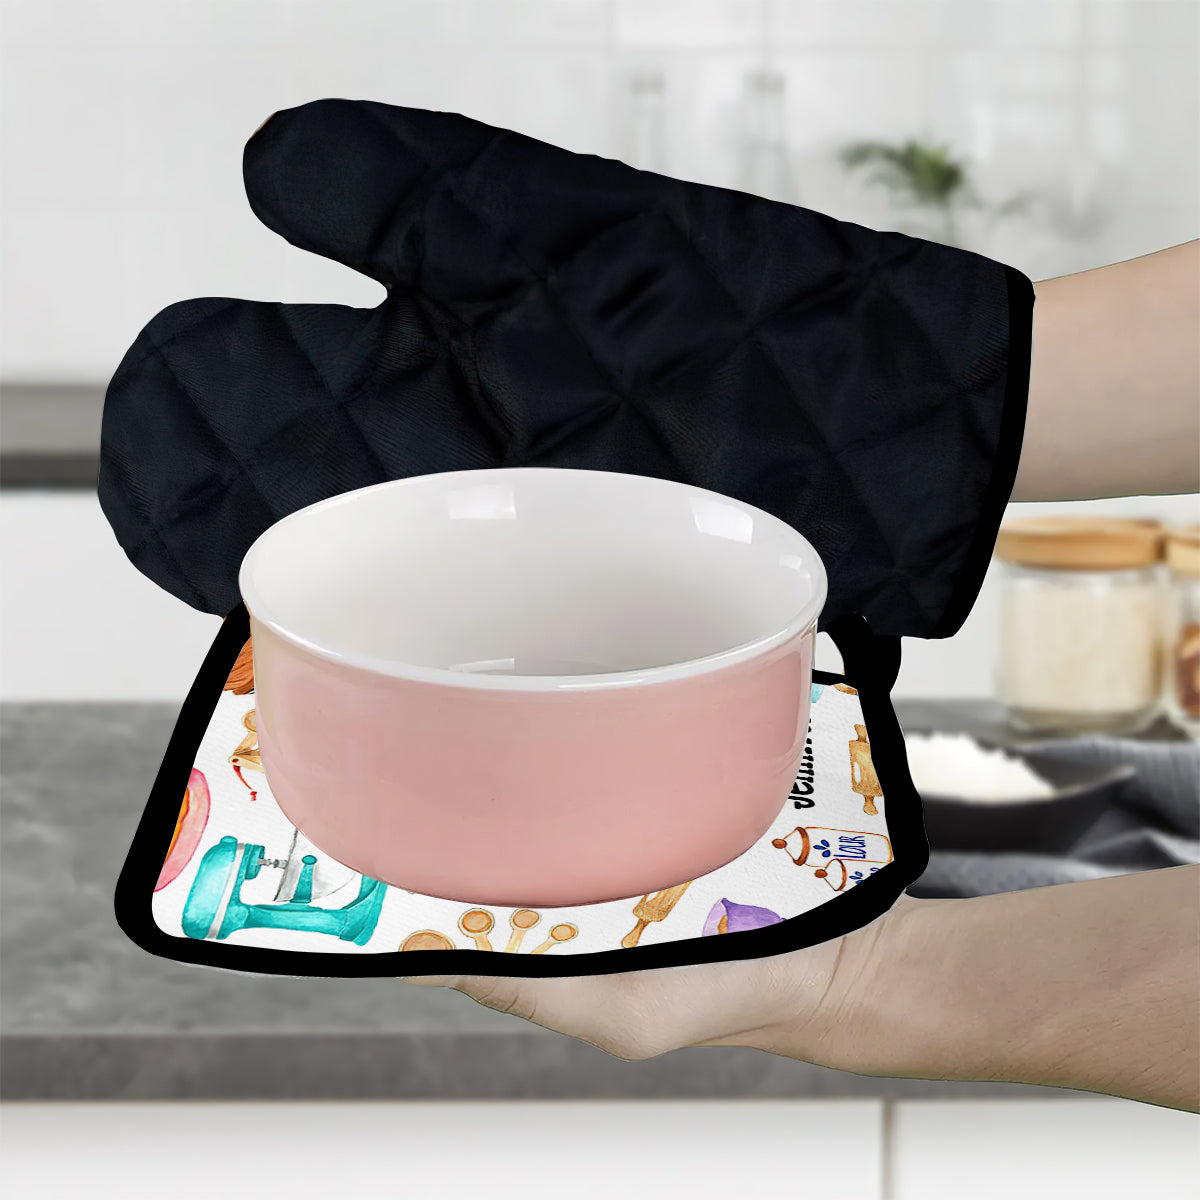 Let's Get Baked - Personalized Baking Oven Mitts & Pot Holder Set